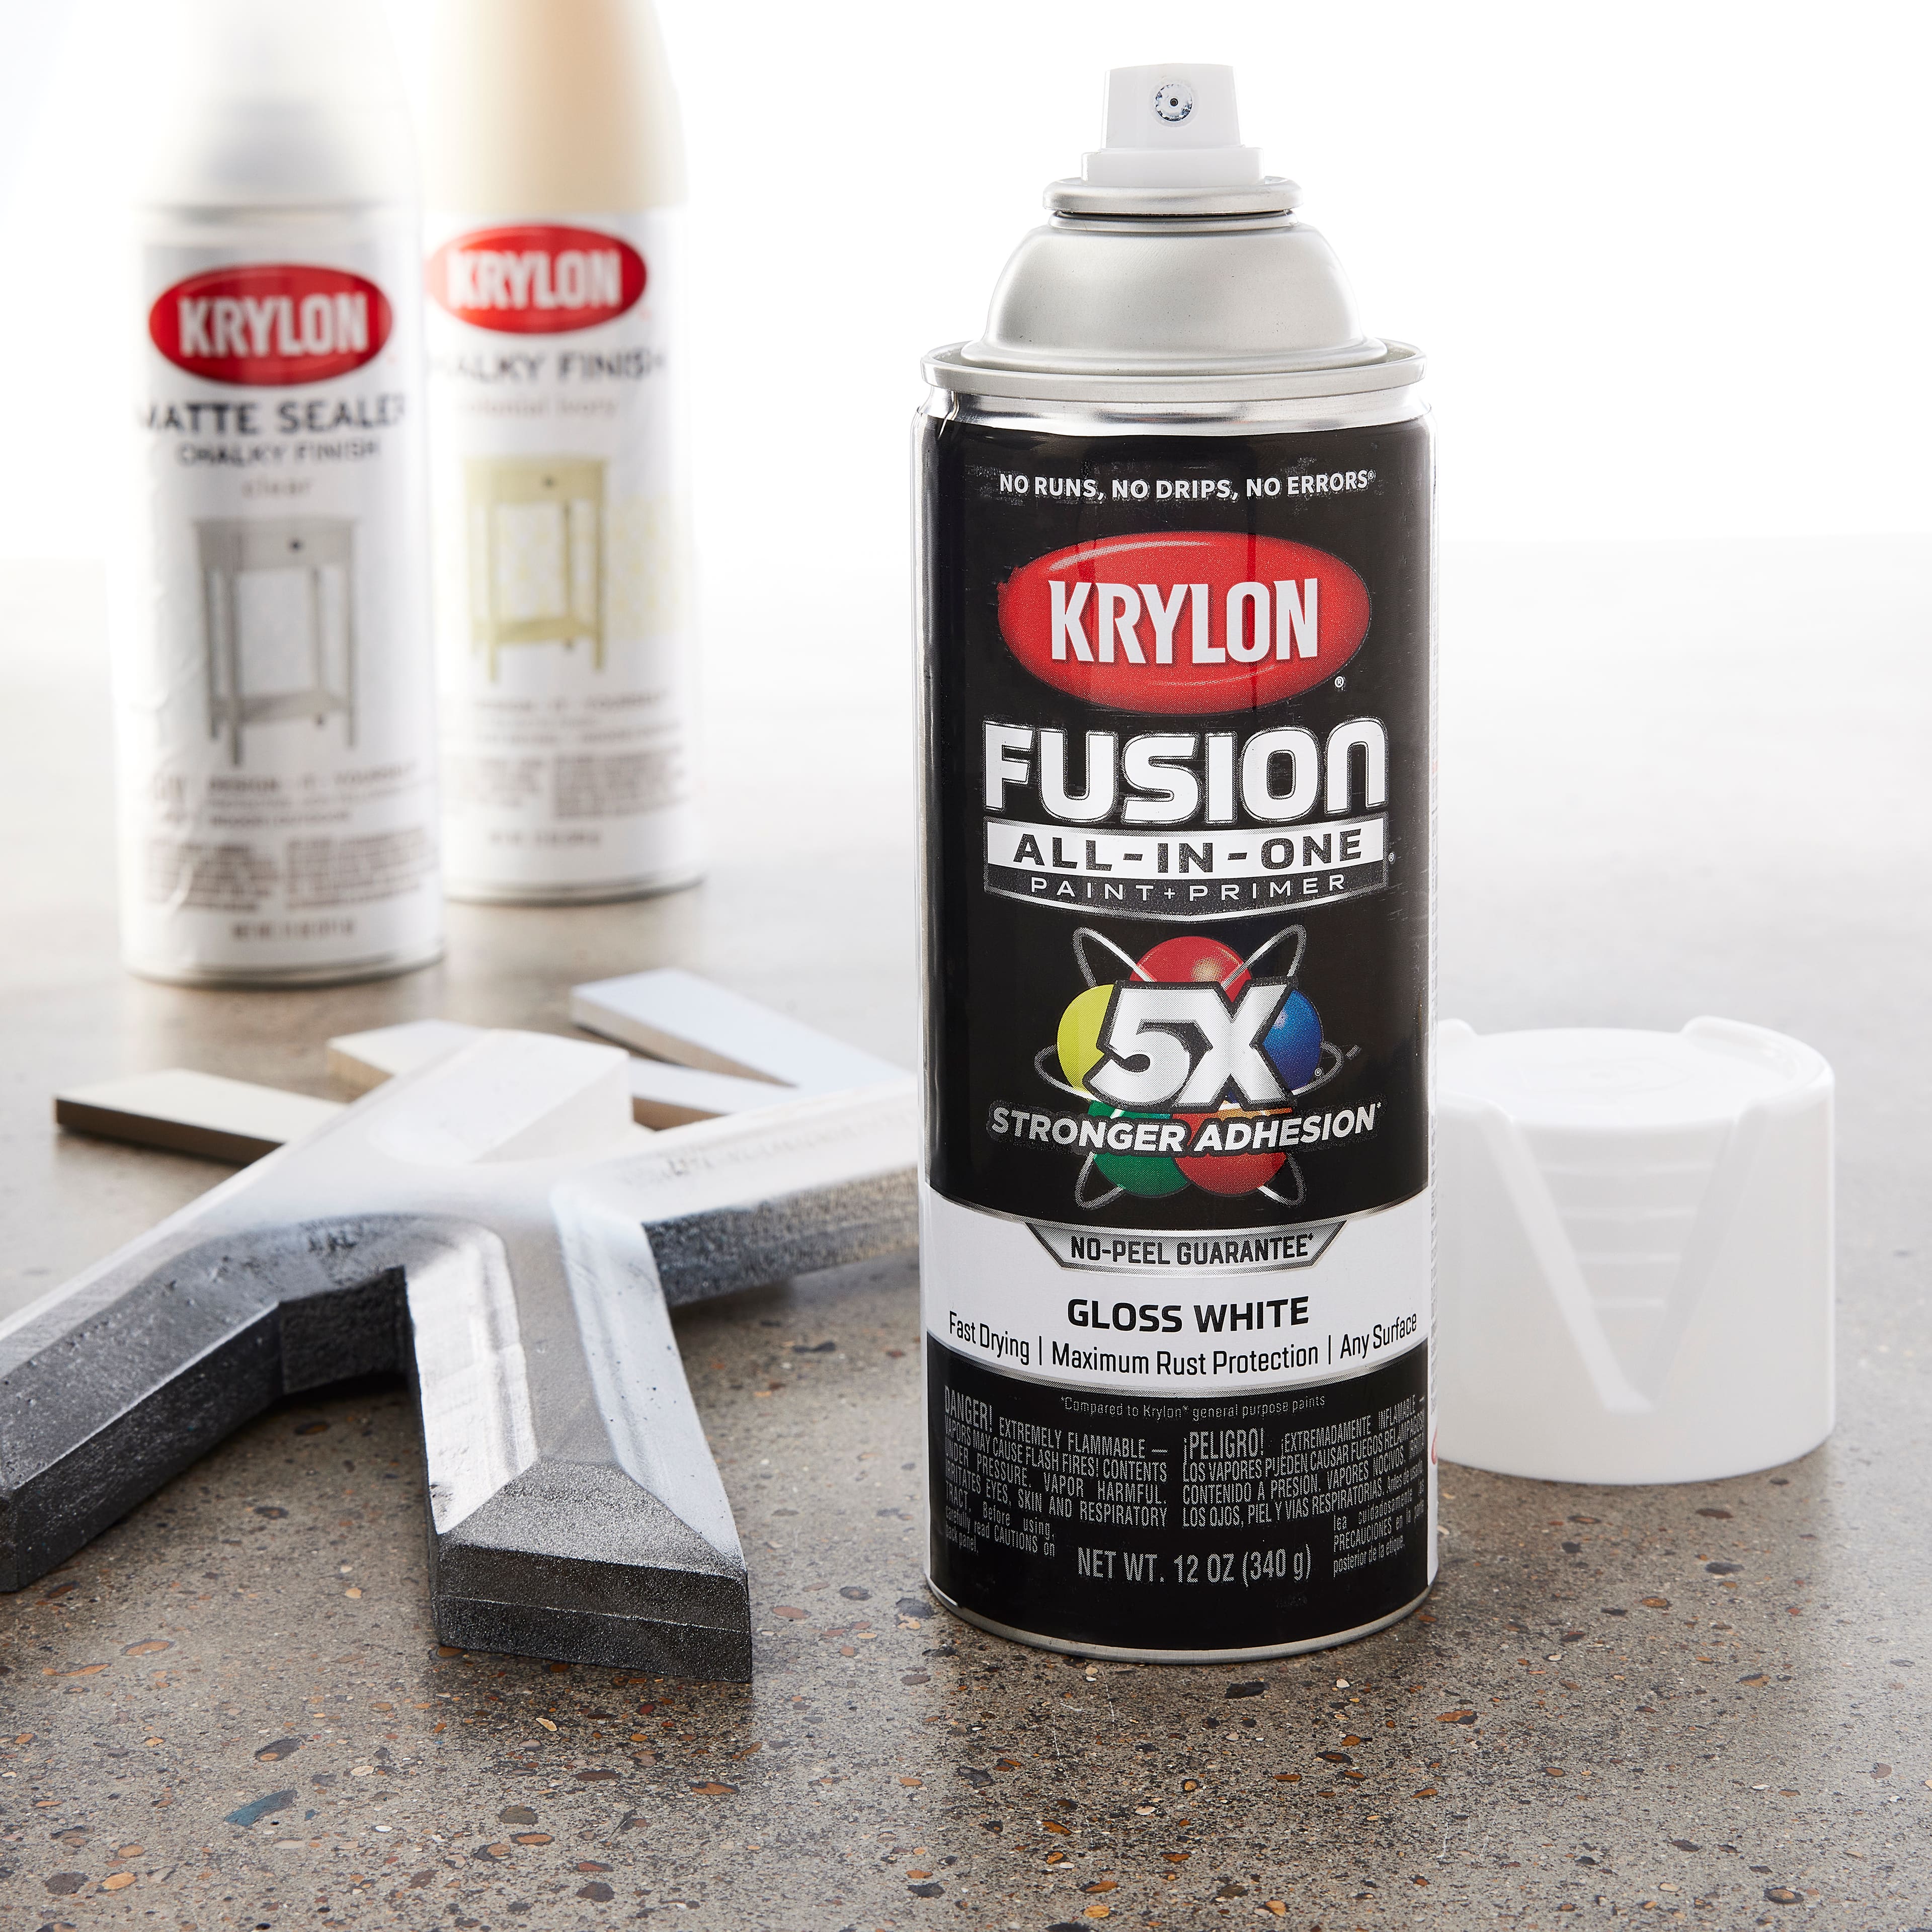 Krylon Matte White Fusion All-In-One Spray Paint & Primer